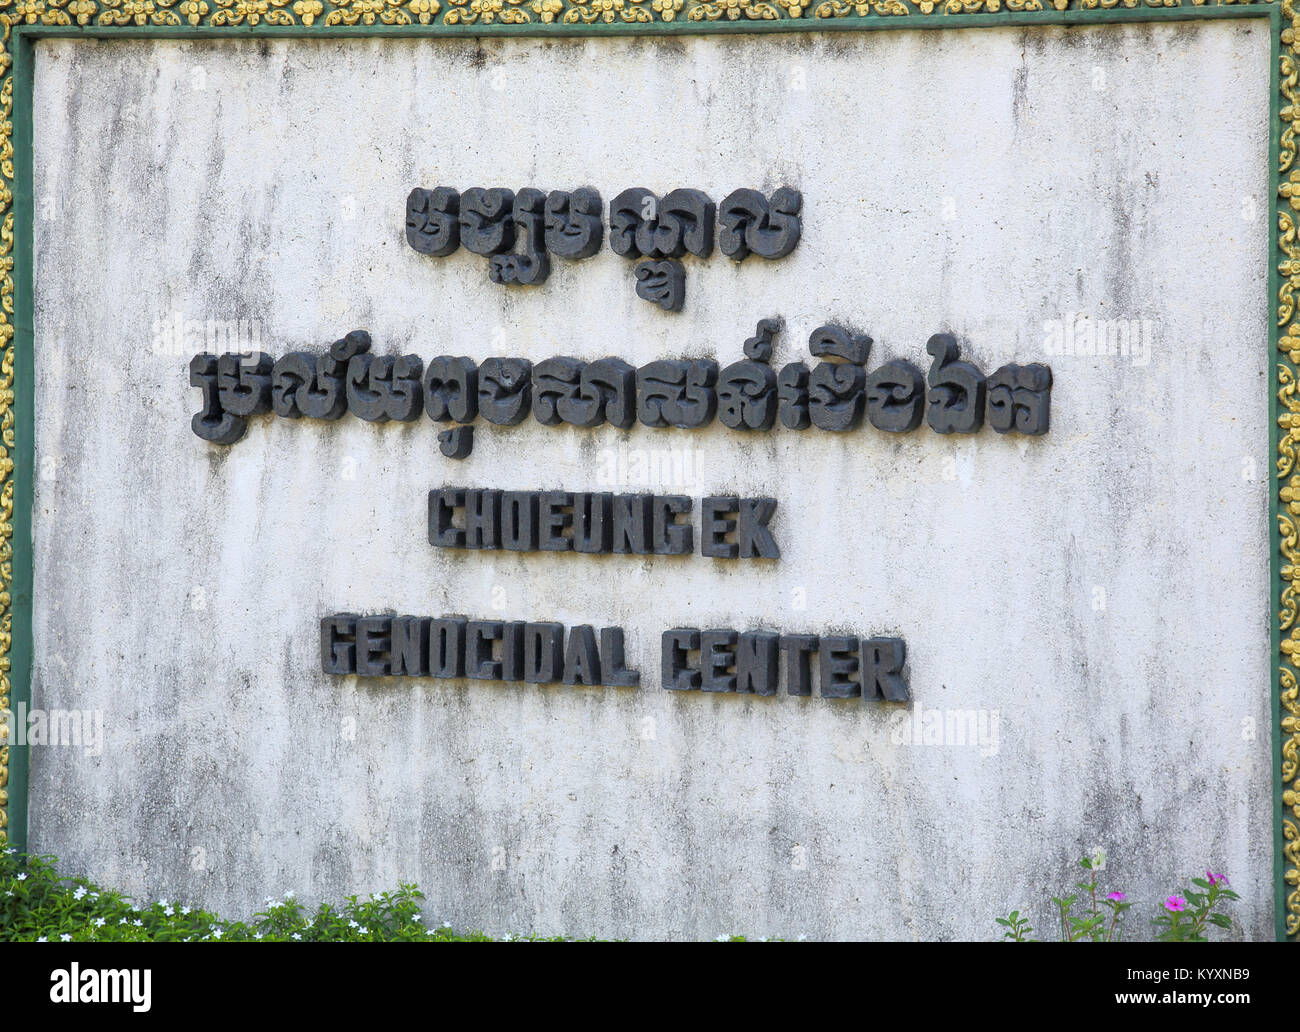 choeung ek genocidal center at the killing fields phnom penh cambodia Stock Photo